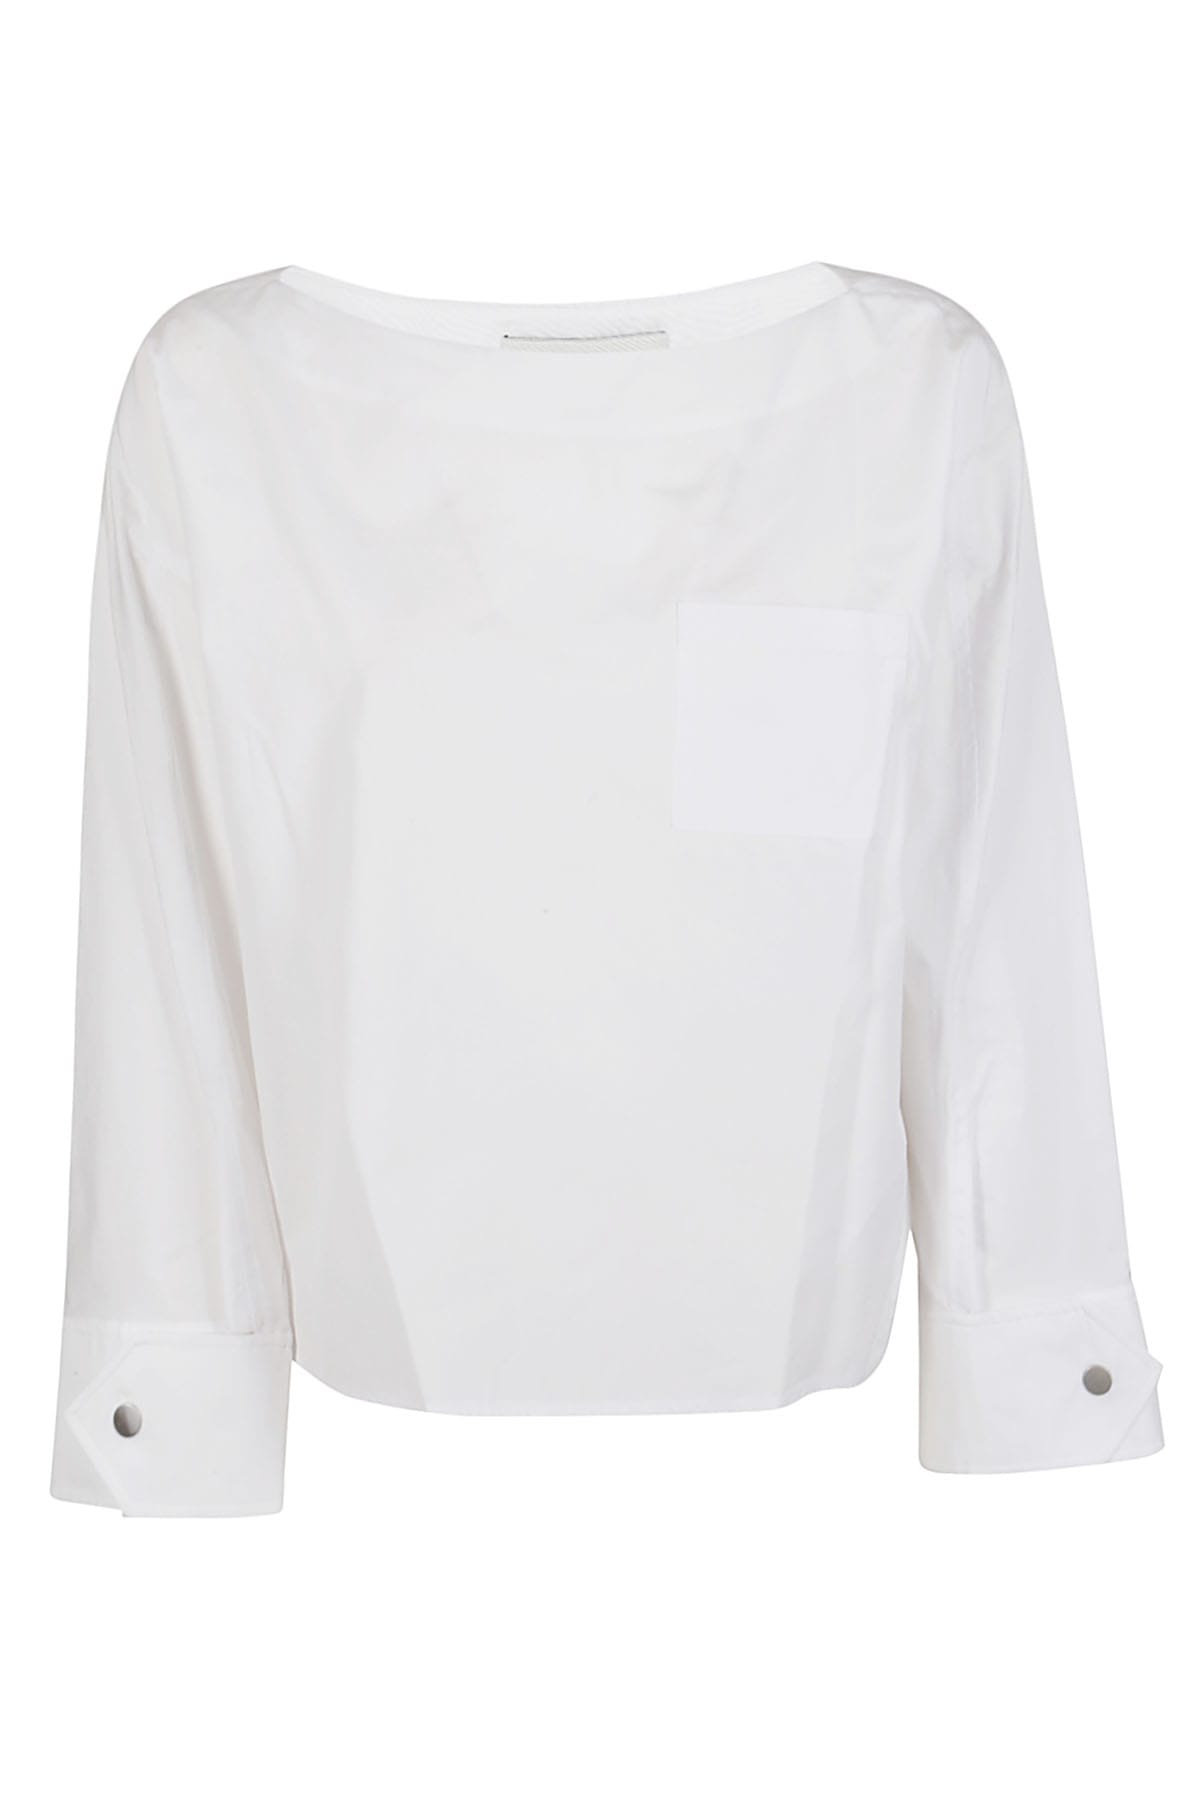 3.1 Phillip Lim / フィリップ リム Shirt In White